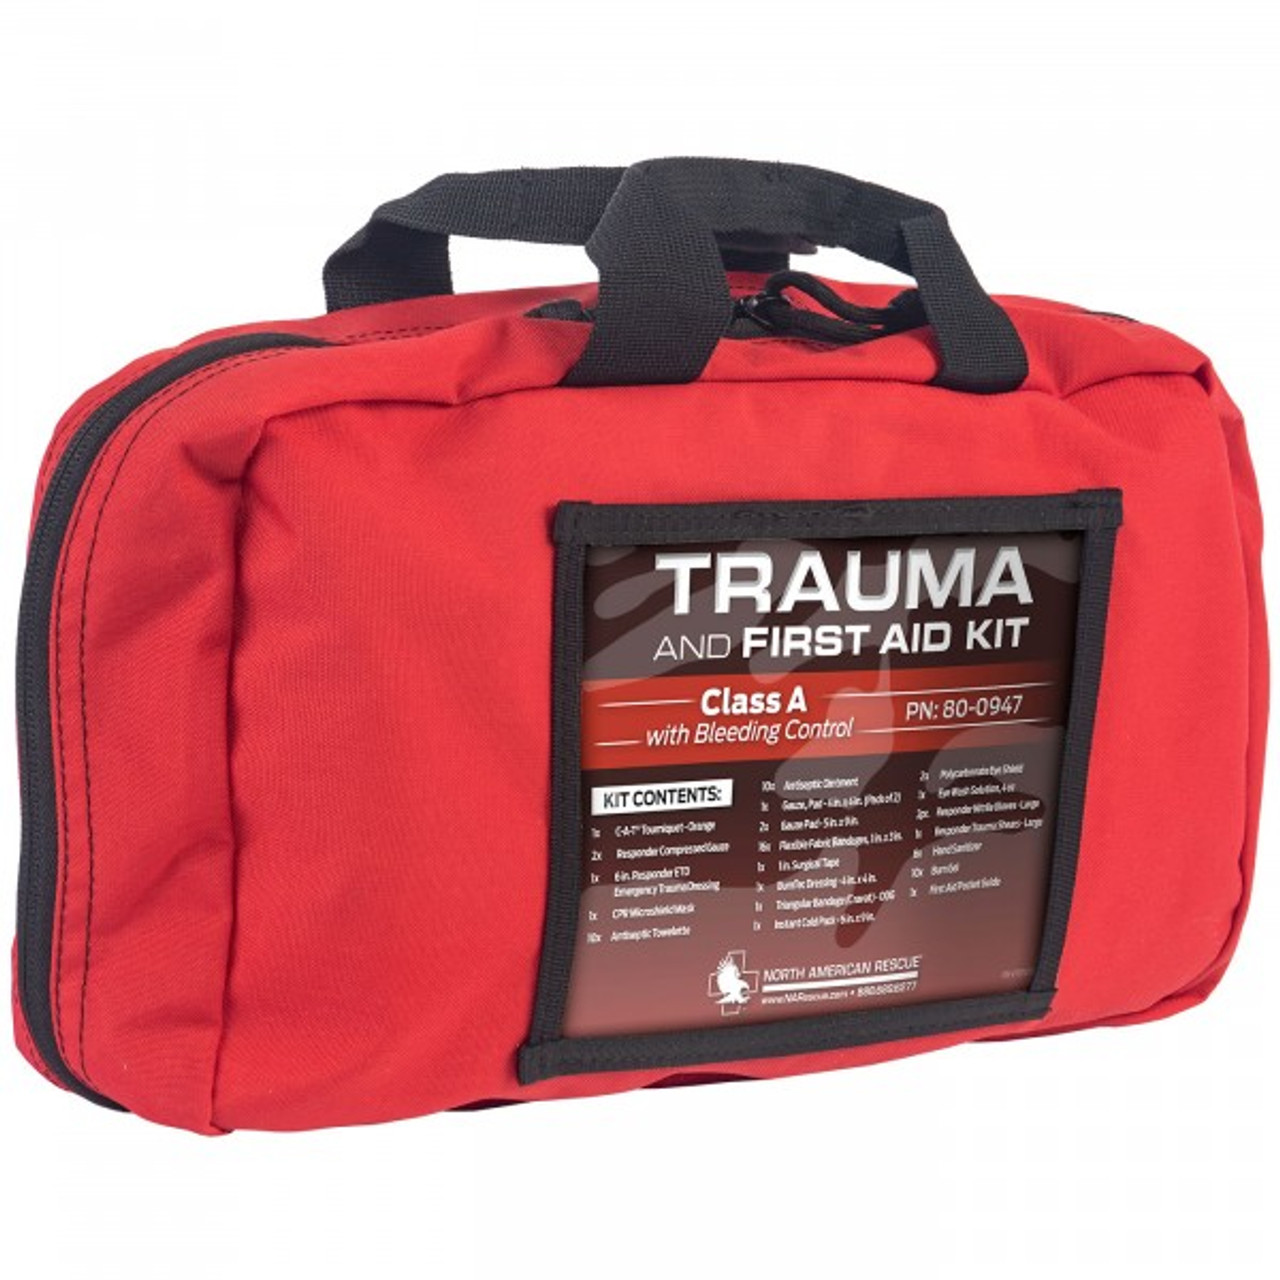 Trauma and First Aid Workplace Kit - Class A 80-0947